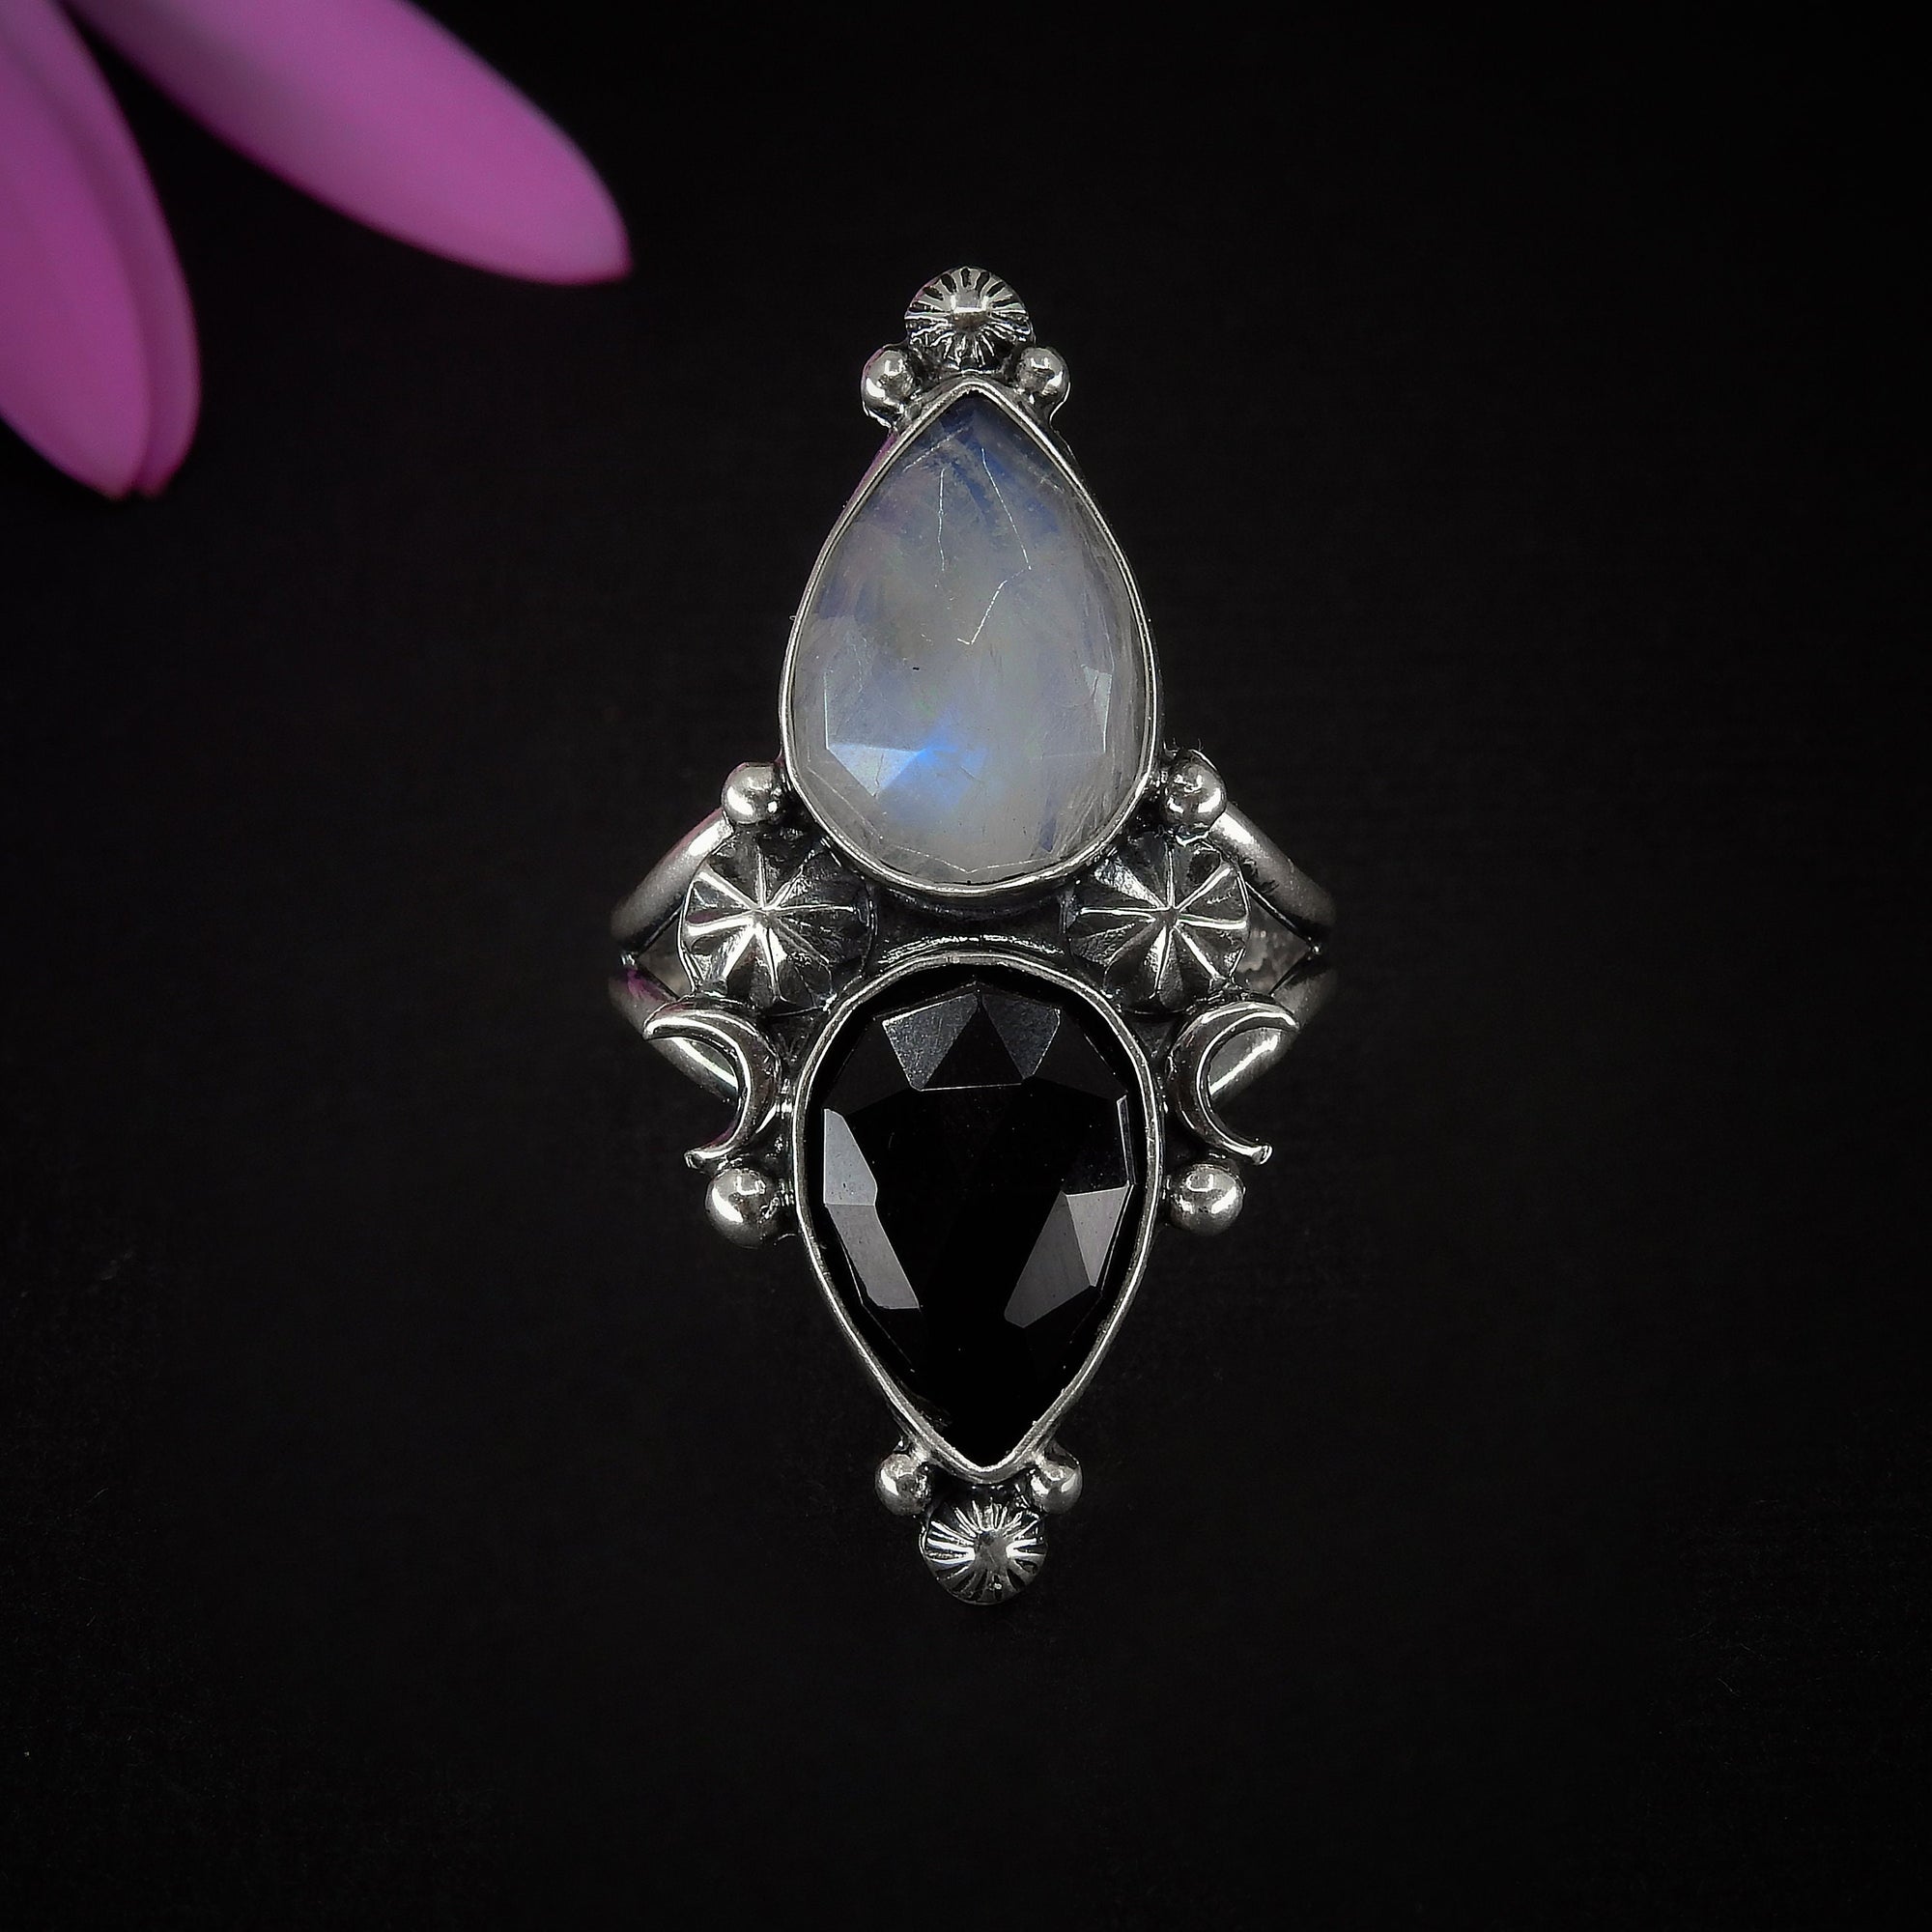 Rose Cut Moonstone & Black Onyx Ring - Size 10 - Sterling Silver - Faceted Moonstone Ring - Black Onyx Jewelry - Double Stone Crescent Moon